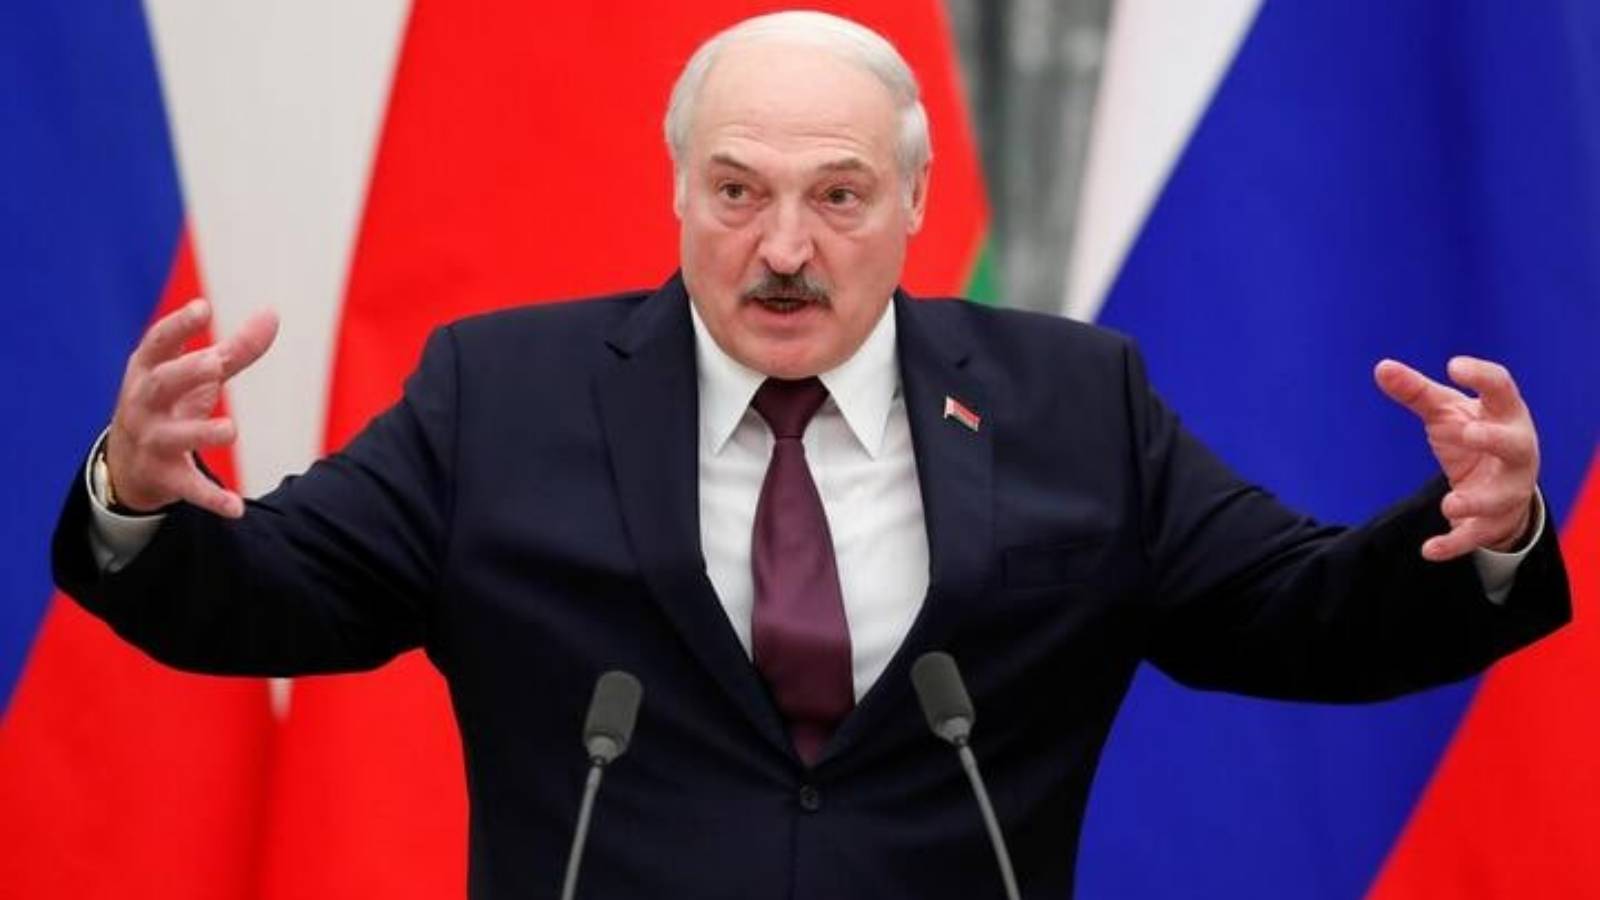 Aleksandr Lukashenko accuses Poland of wanting to dismember Ukraine and Belarus